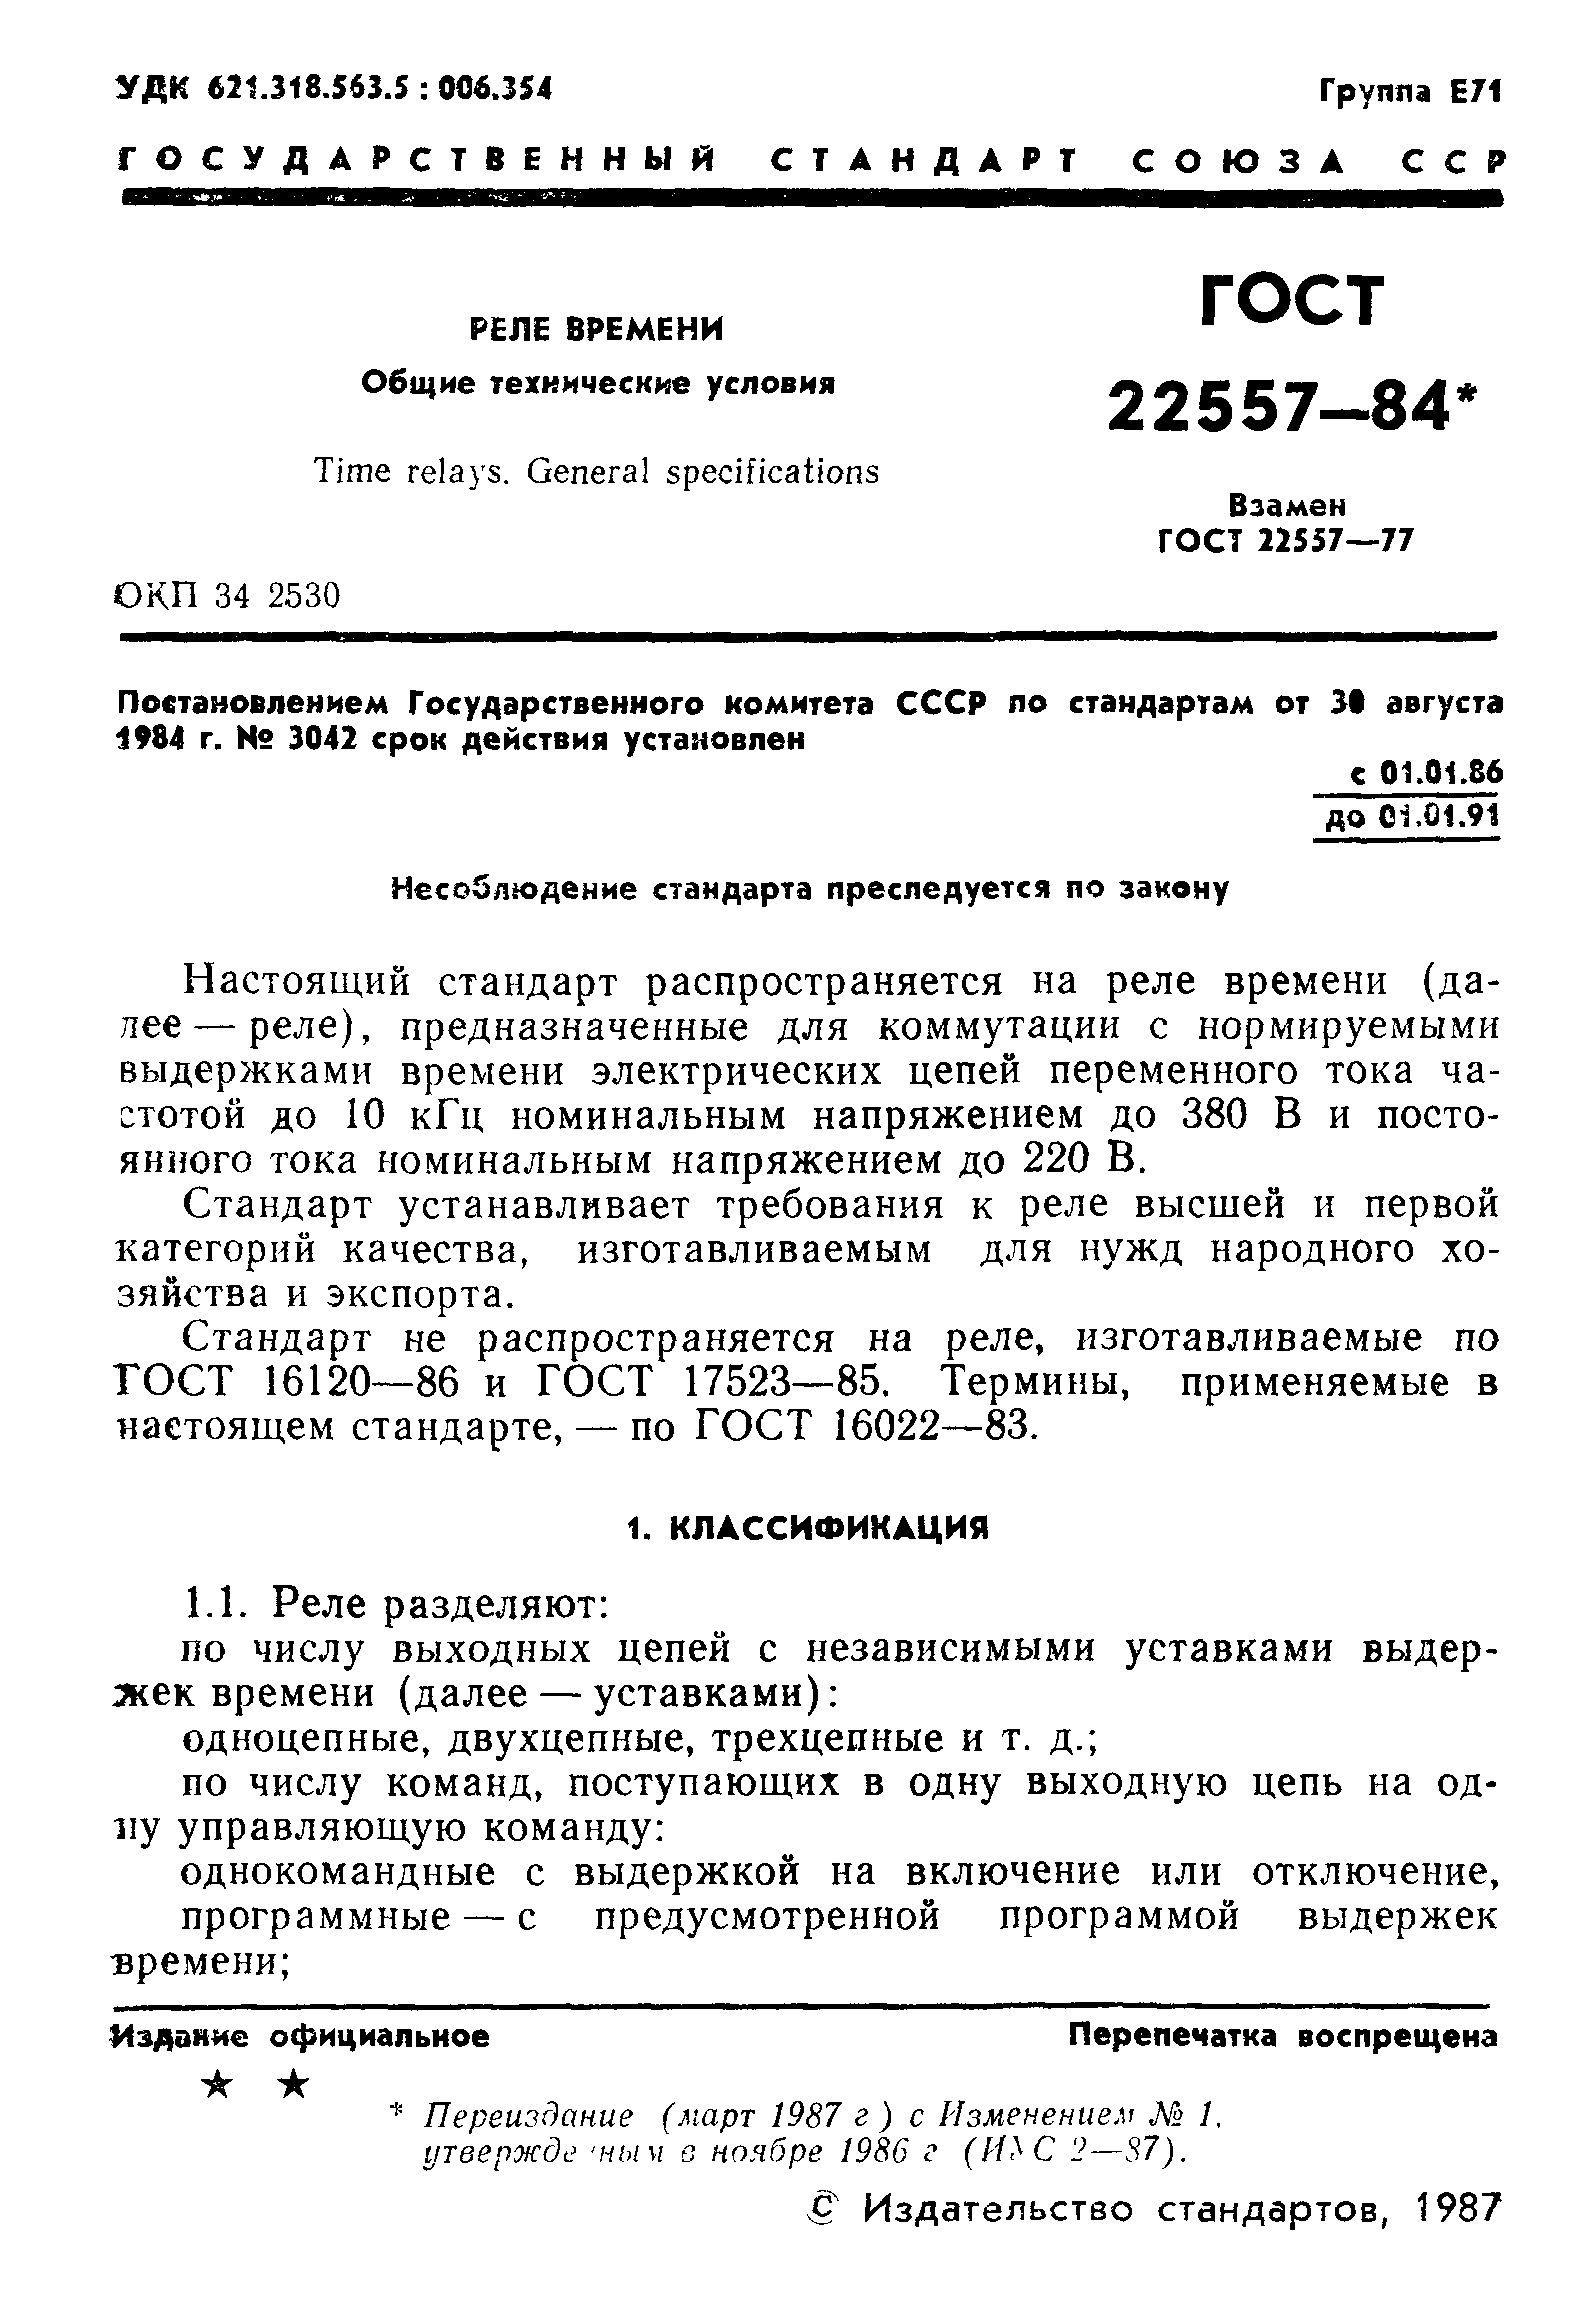 ГОСТ 22557-84